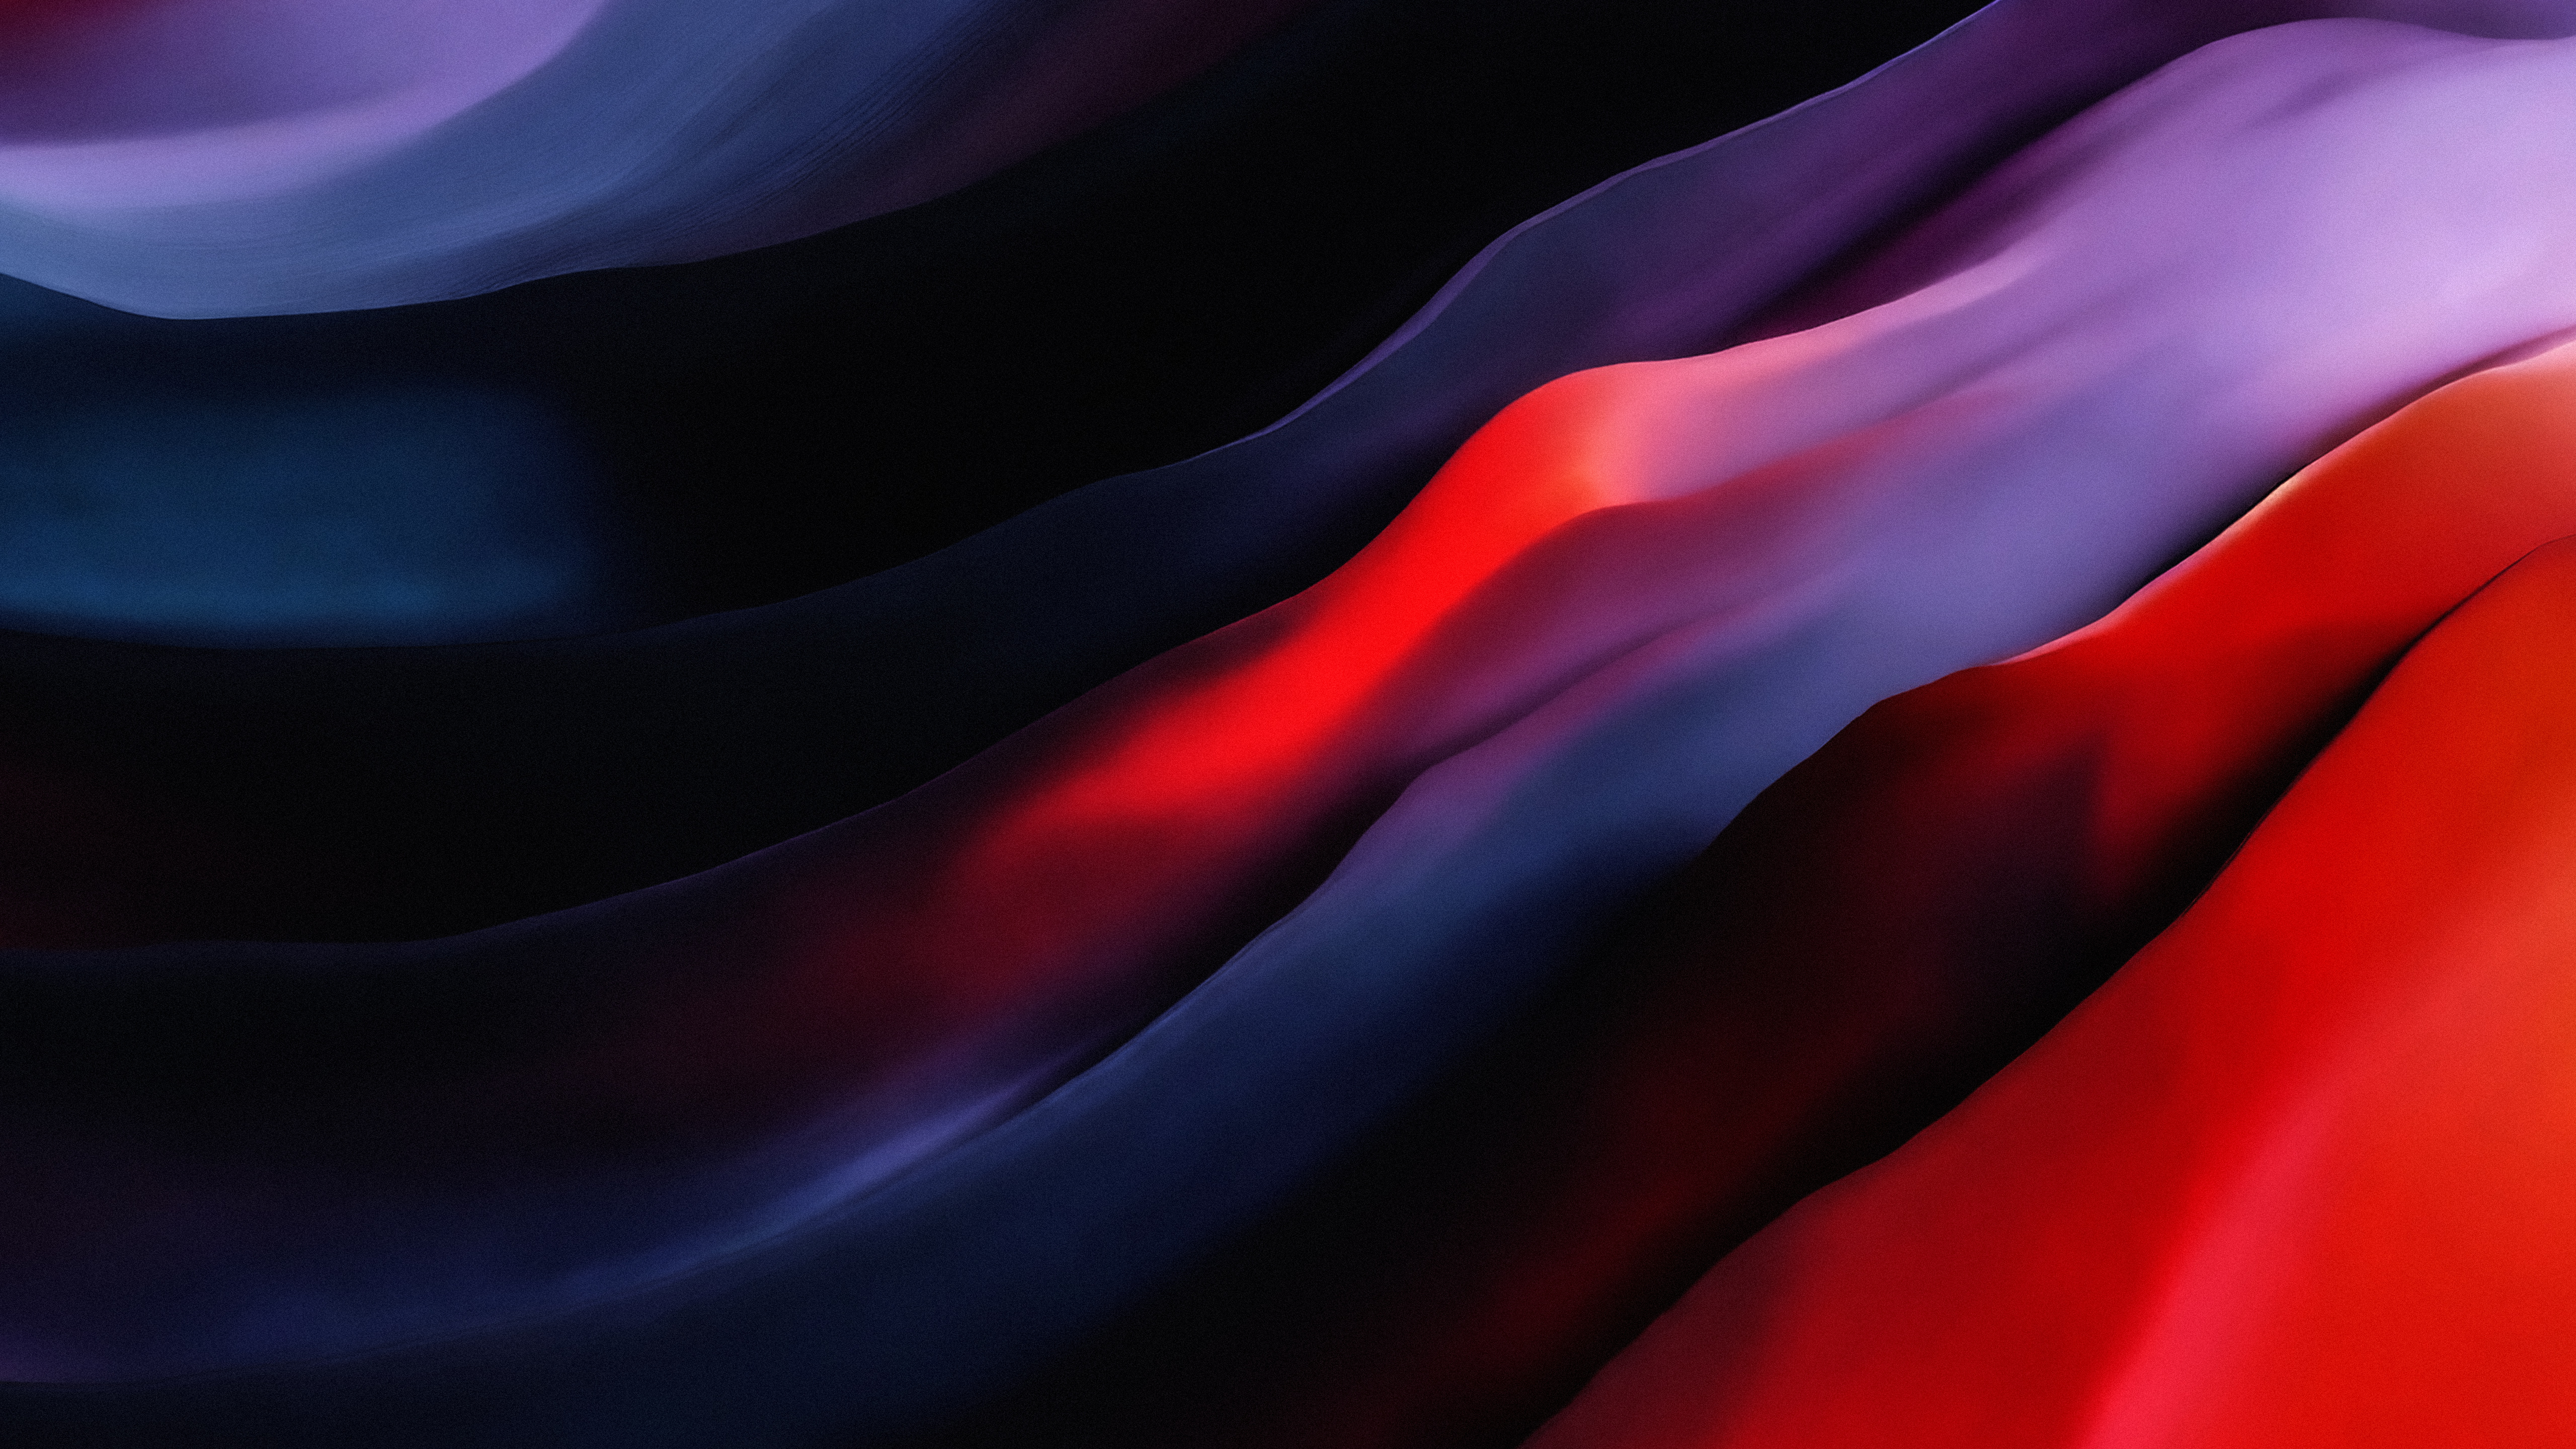 General 5120x2880 abstract 3D Abstract gradient dark background illustration Blender CGI digital art artwork minimalism colorful waves